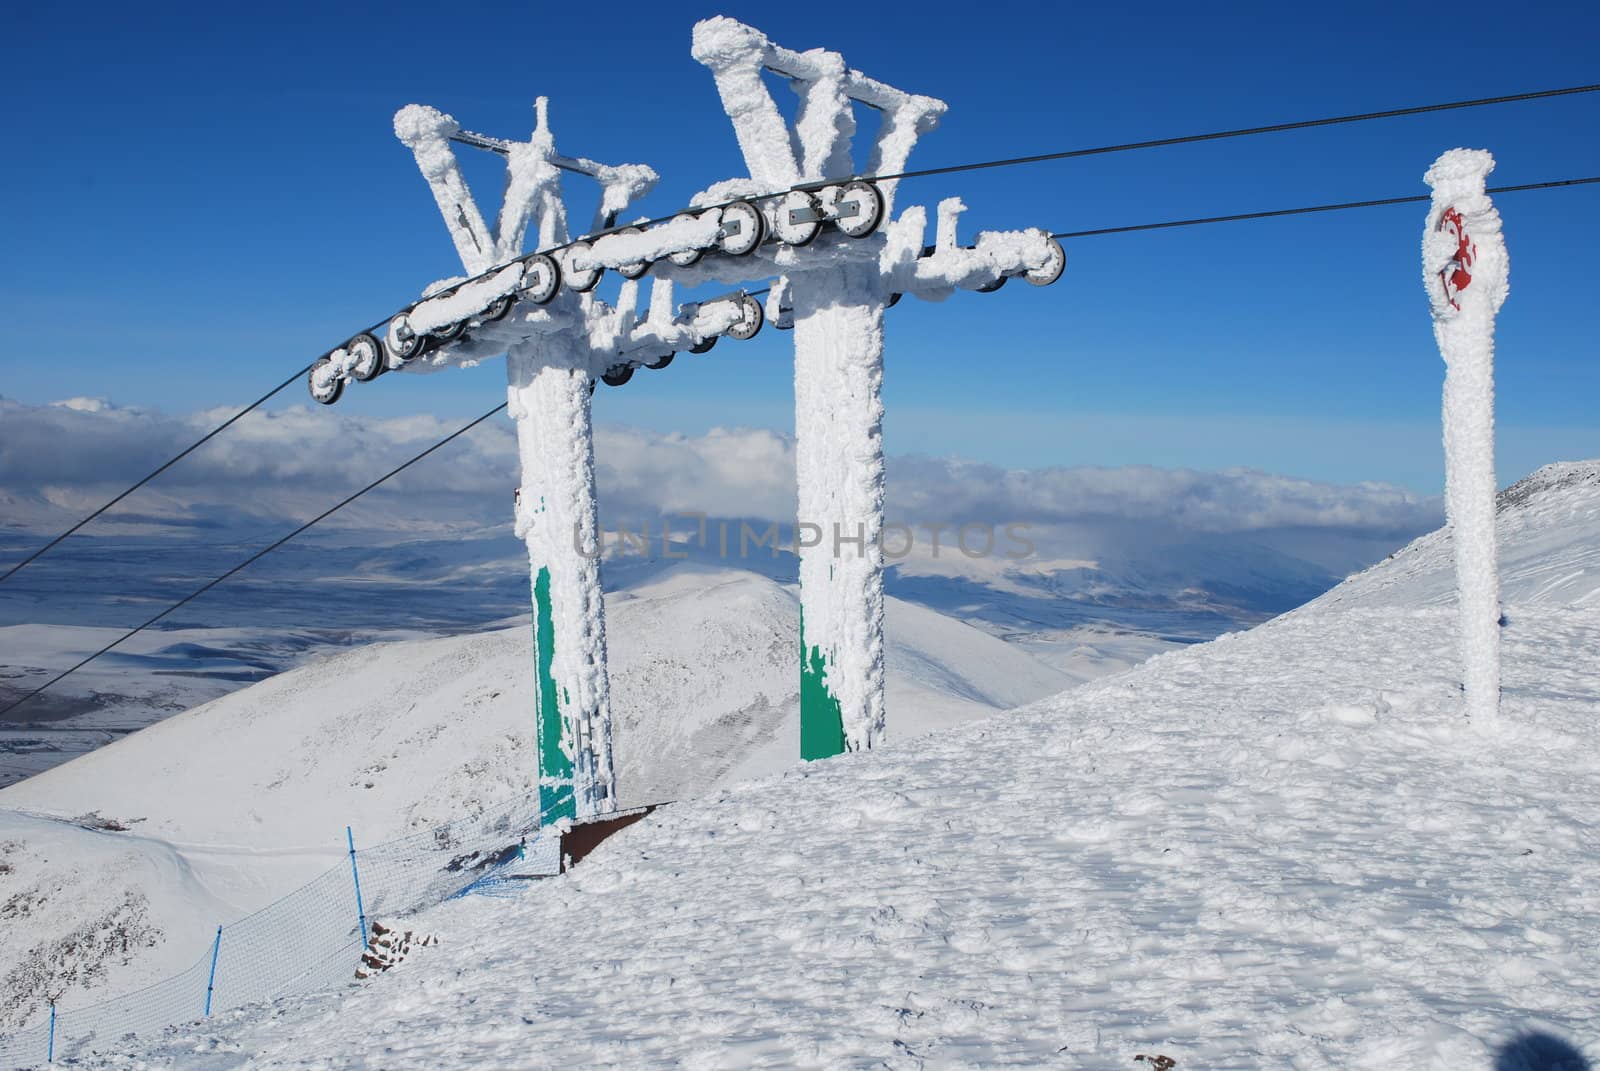 Ski Resort chair lift in Turkey Mountains.Palandoken by svtrotof